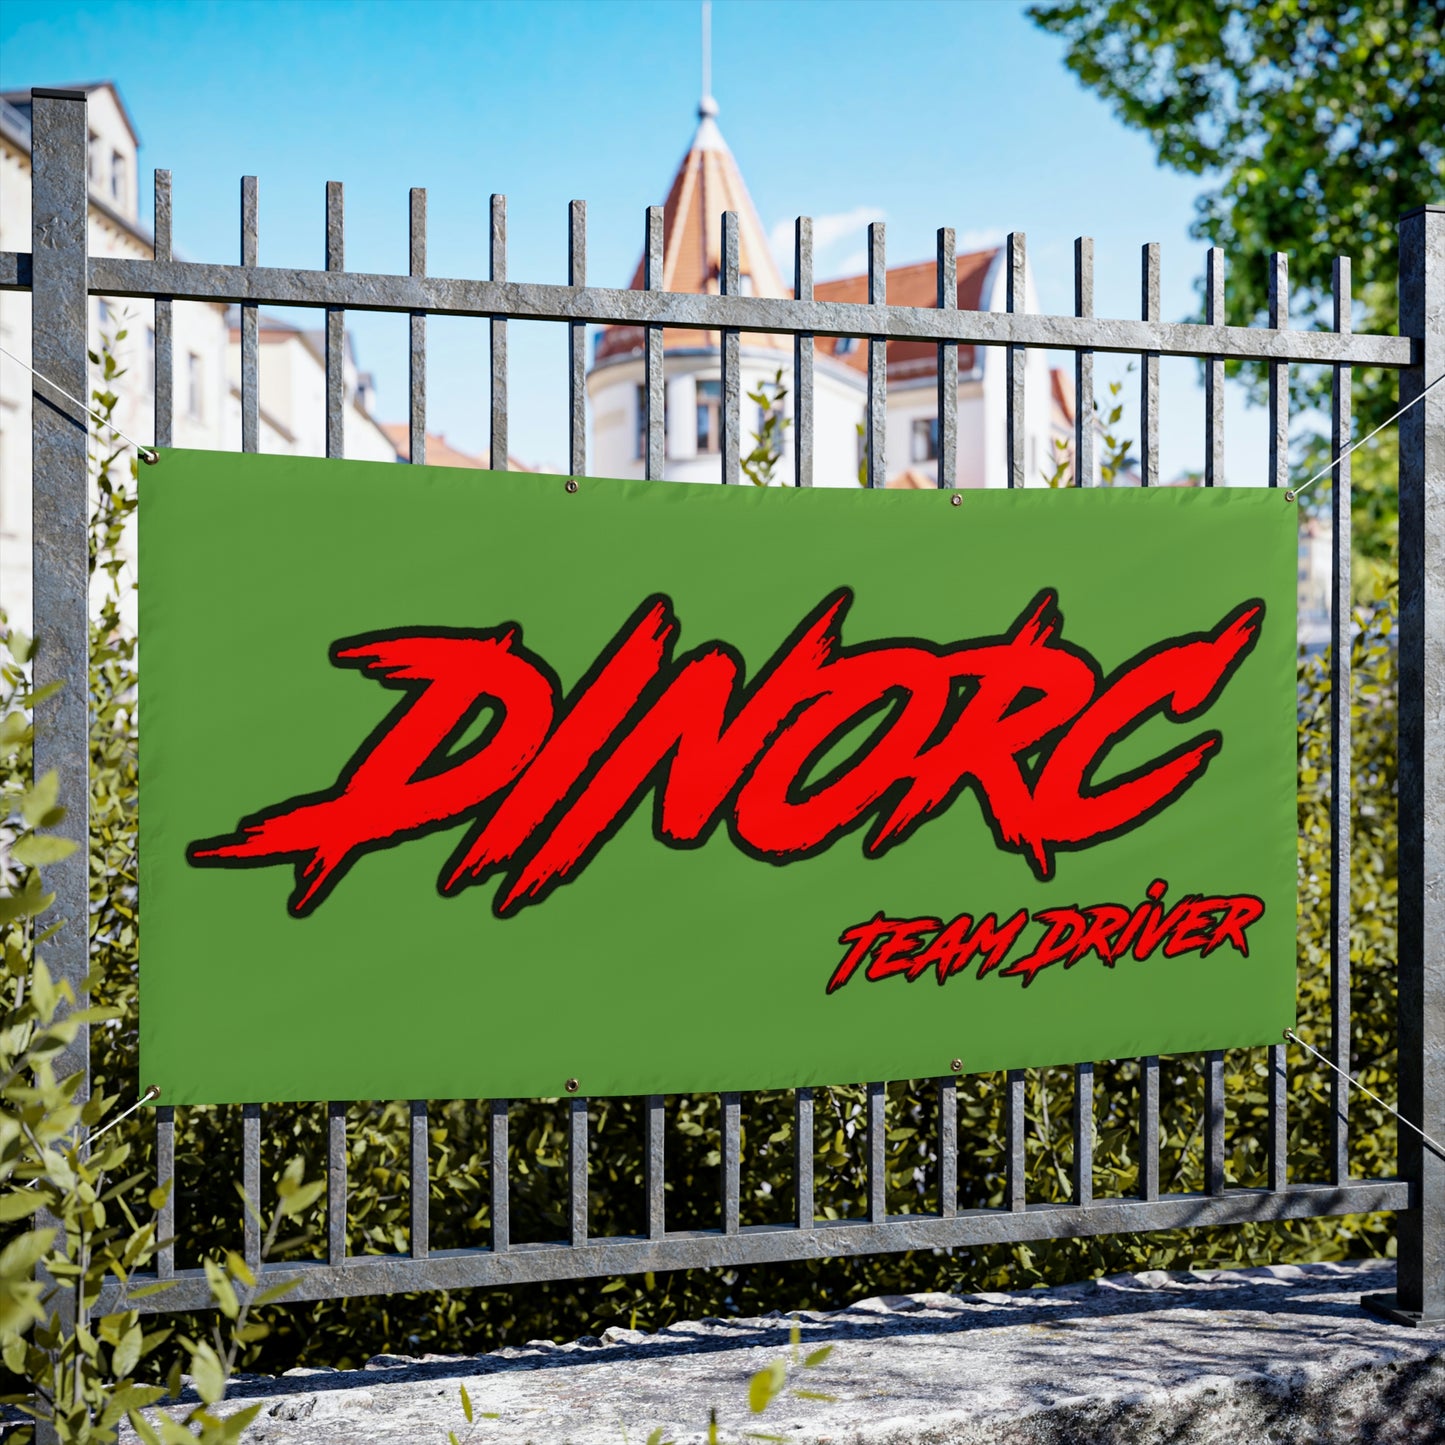 DinoRC Team Driver Vinyl Banners